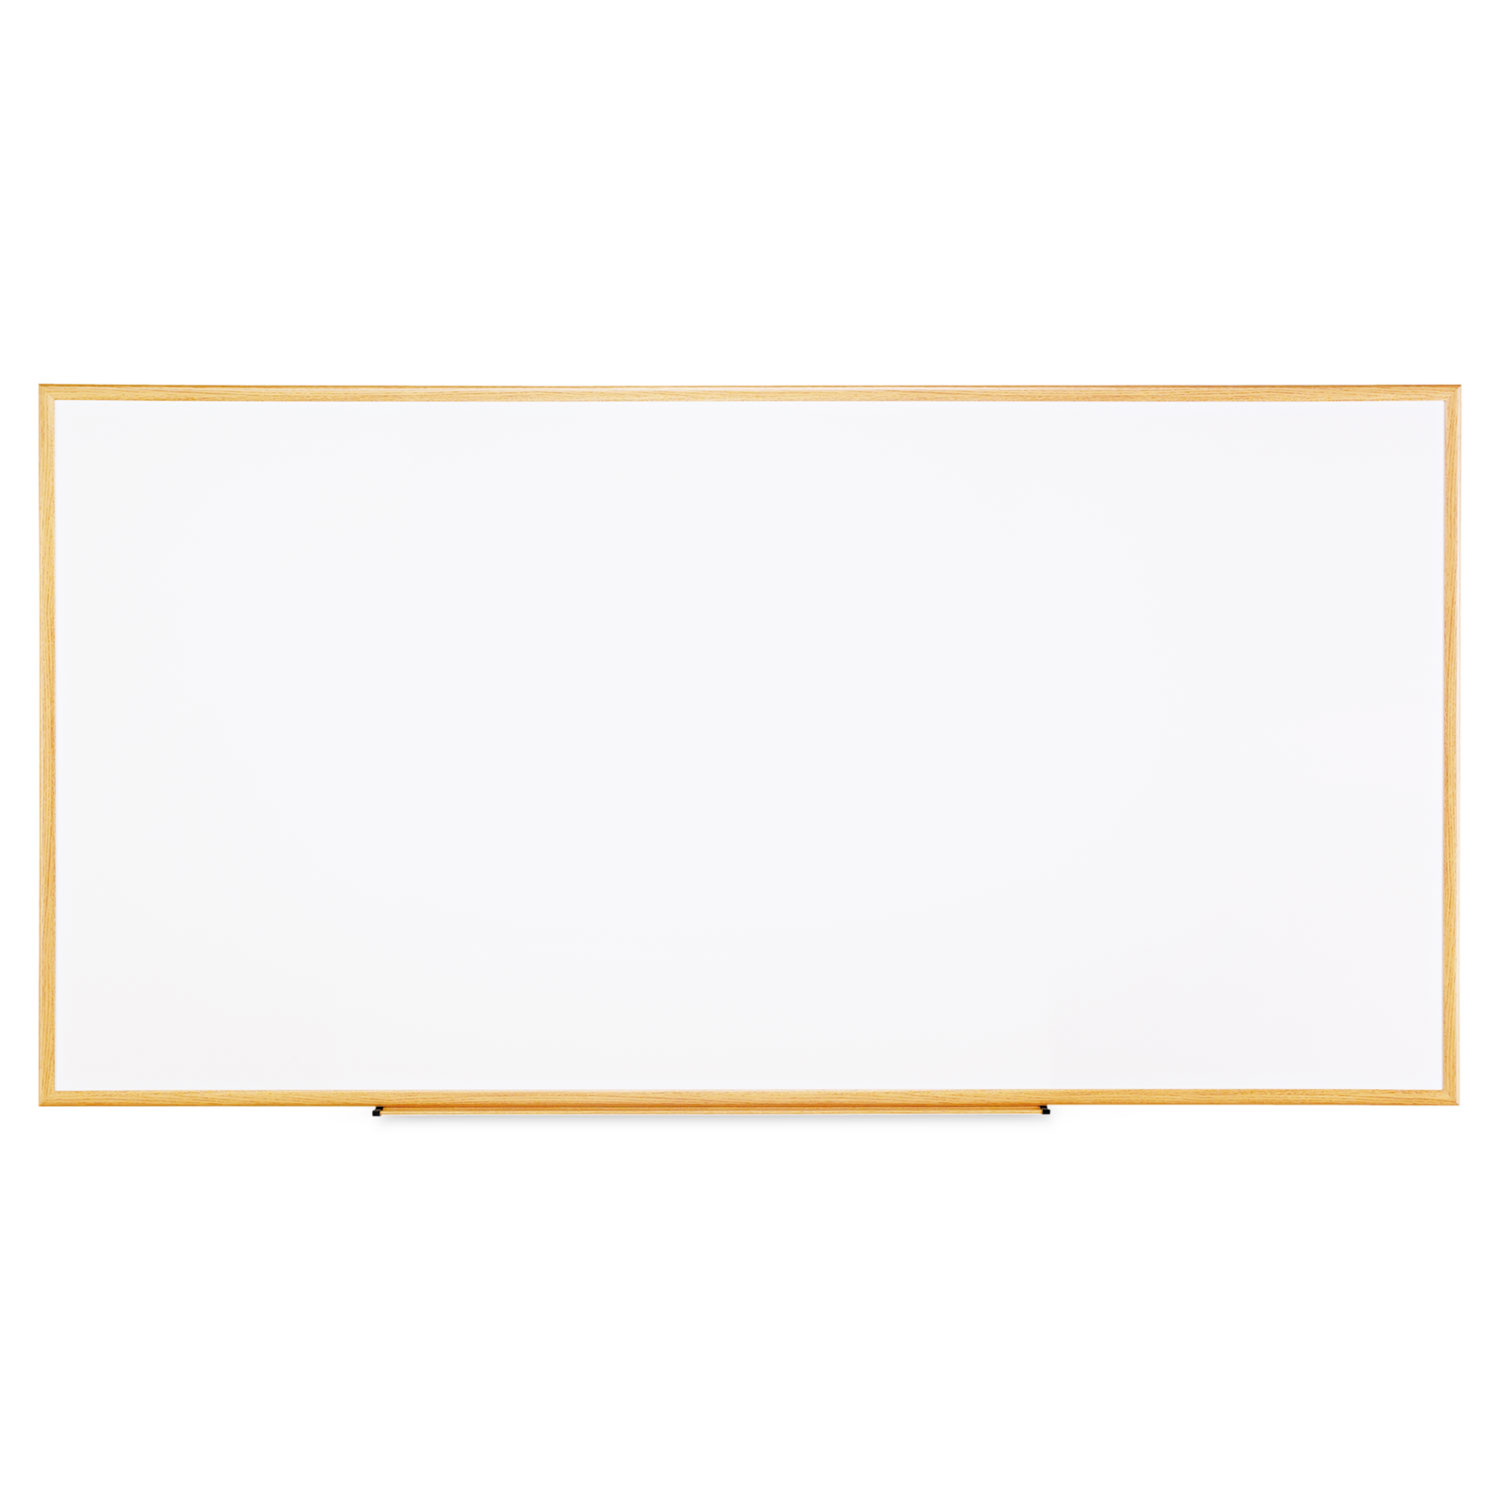  Universal UNV43620 Dry-Erase Board, Melamine, 96 x 48, White, Oak-Finished Frame (UNV43620) 